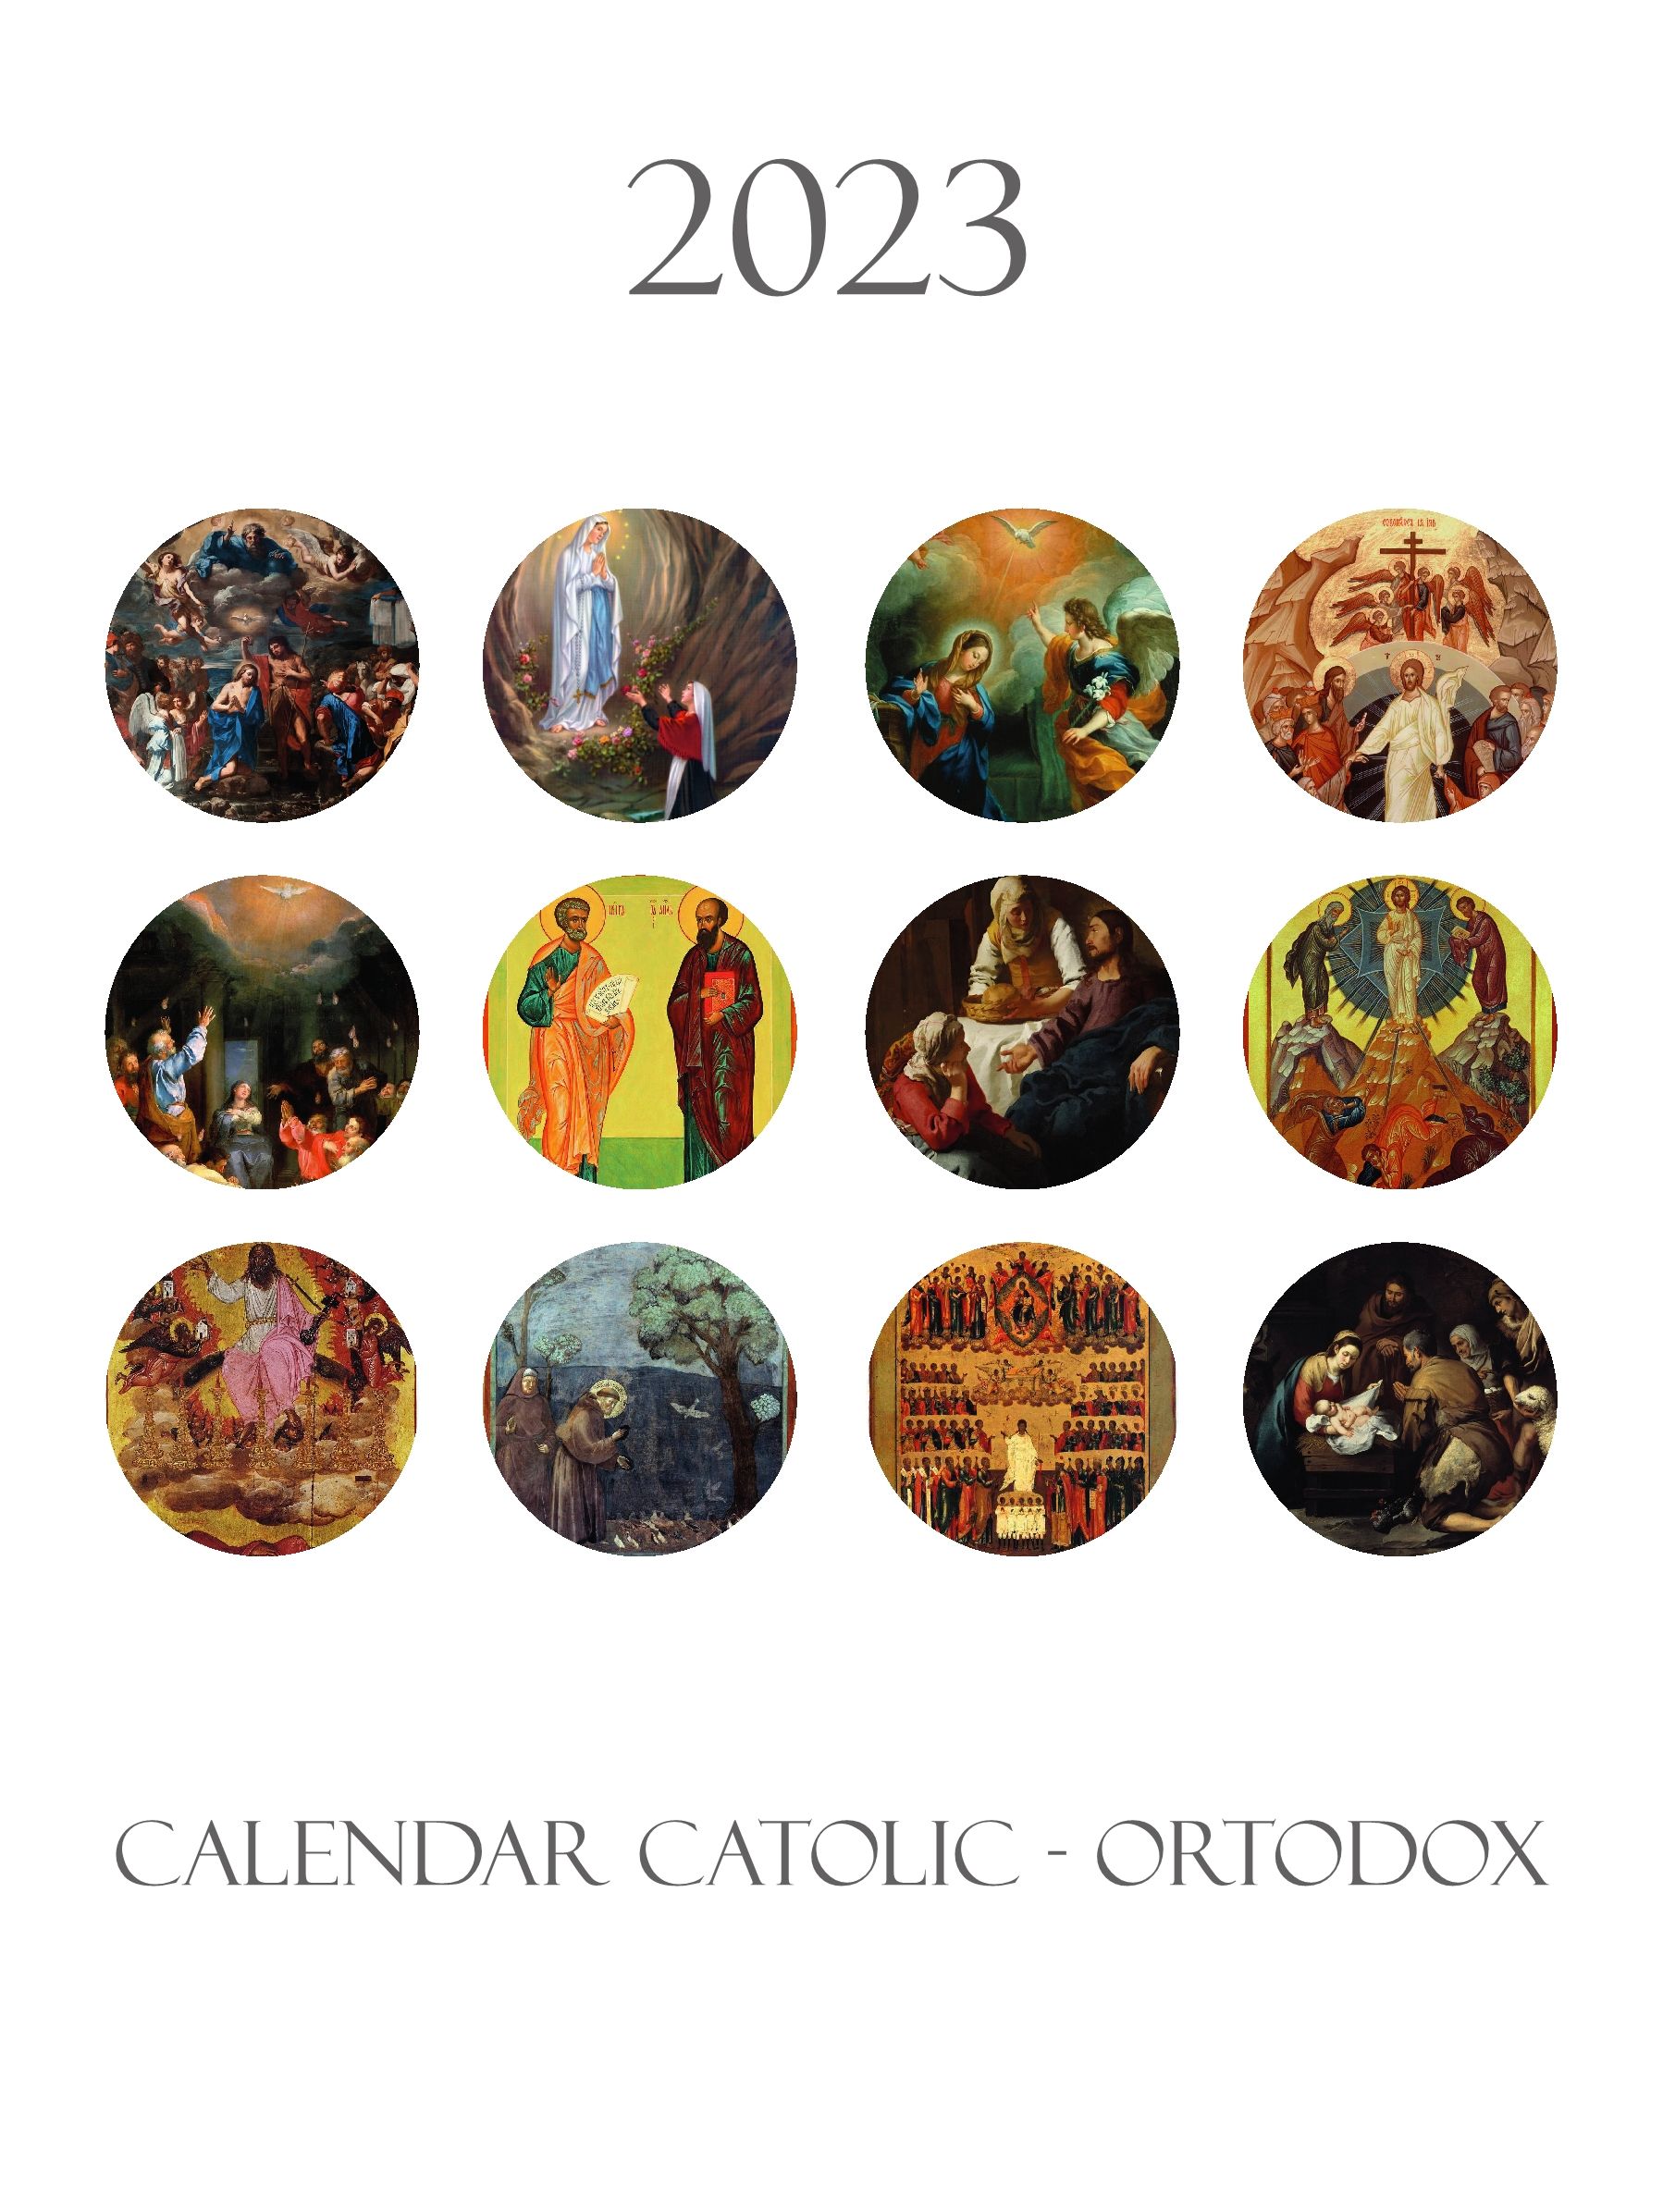 Calendar catolic-ortodox 2023